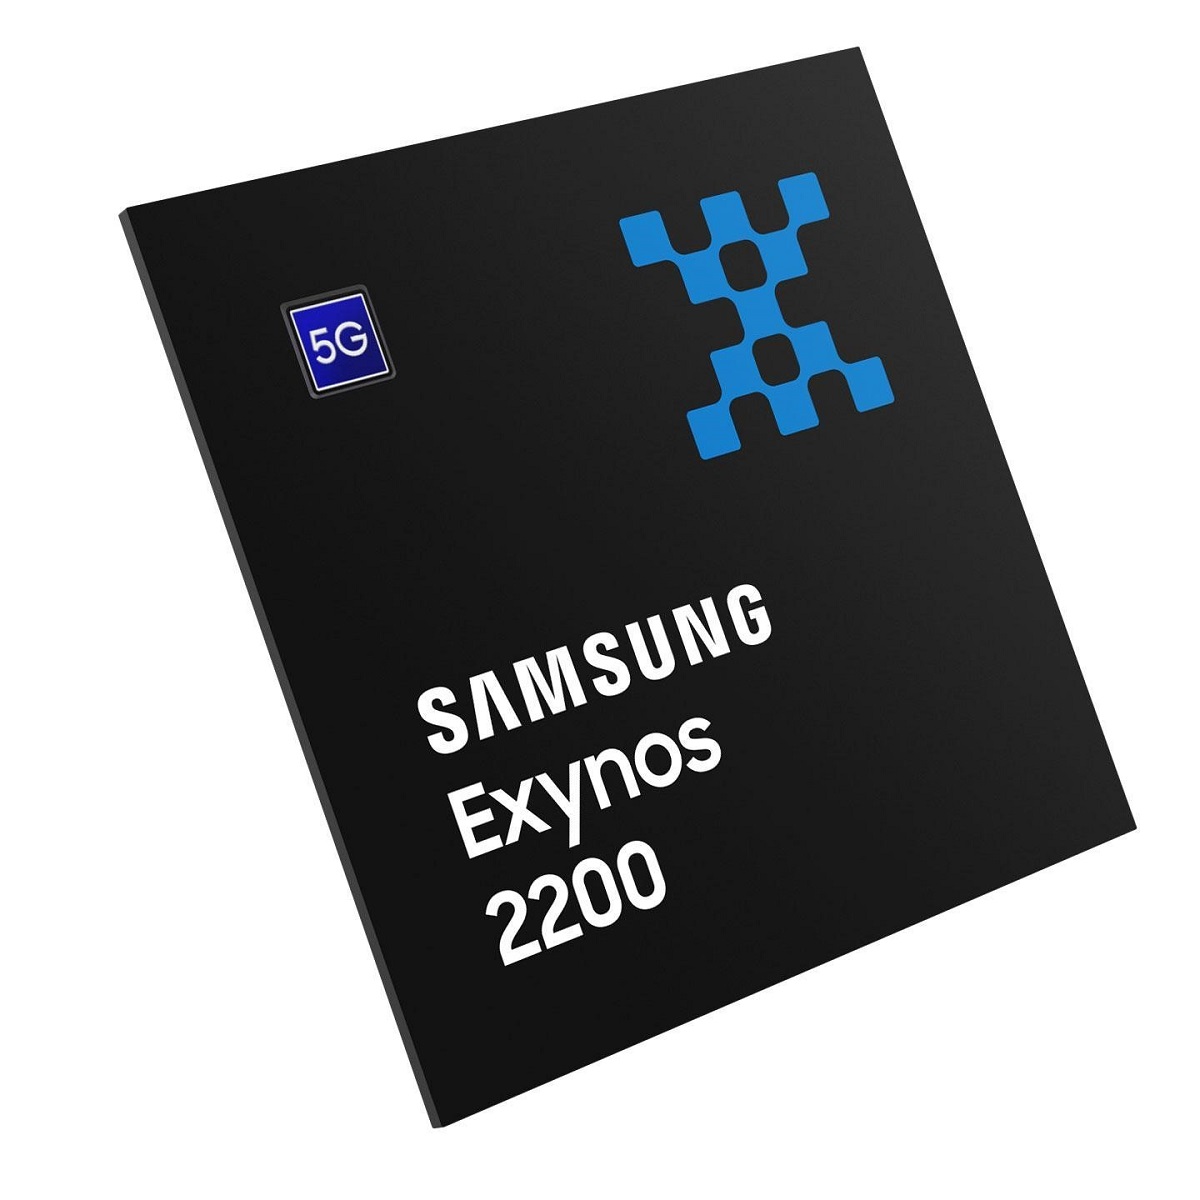 Mengenal Keunggulan Samsung Exynos 2200, Chipset yang Mendukung Dunia Ai